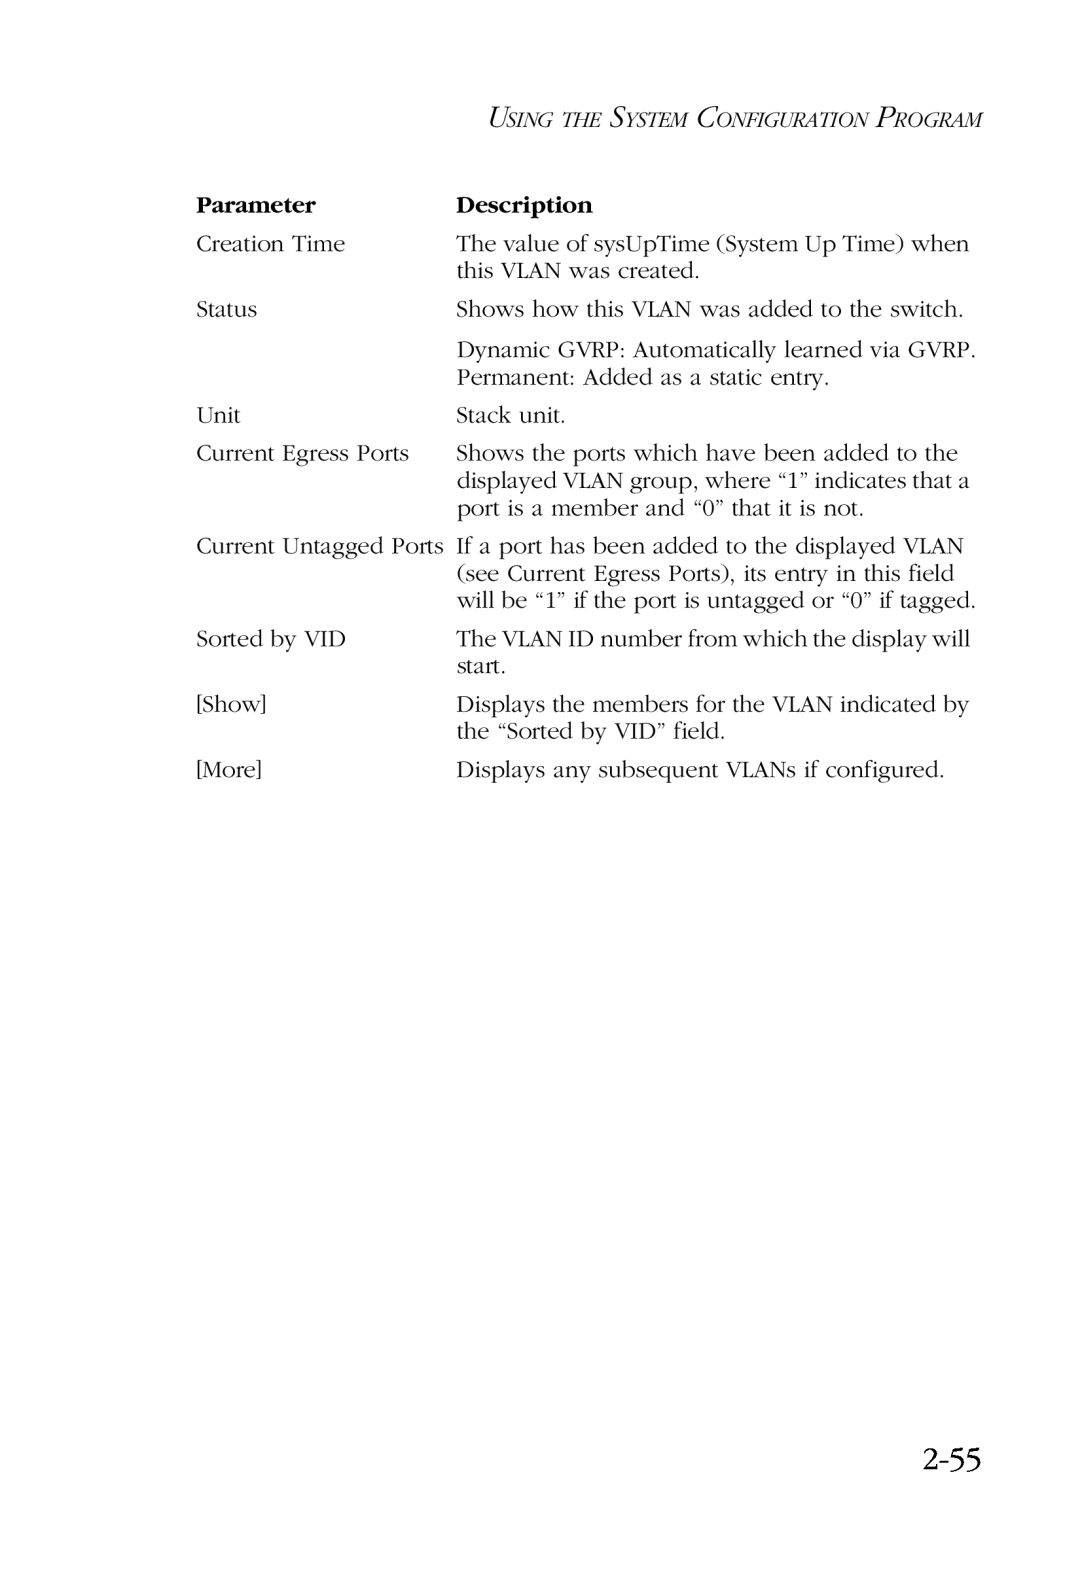 SMC Networks SMC6924VF manual 2-55, Parameter, Description 